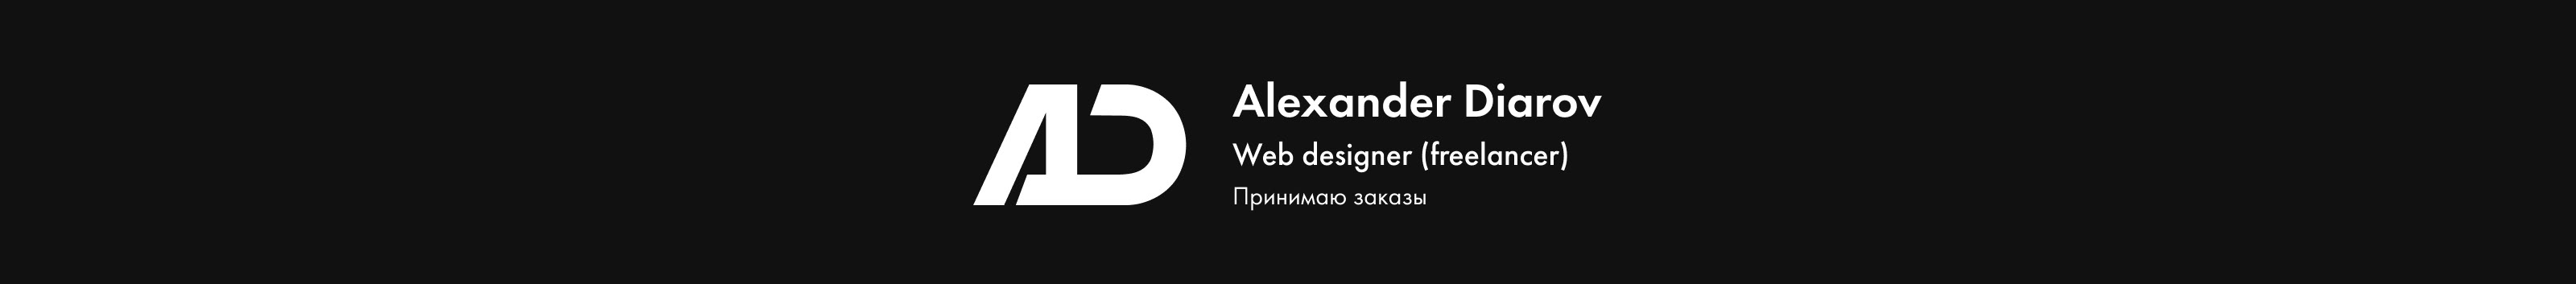 Alexander Diarov's profile banner